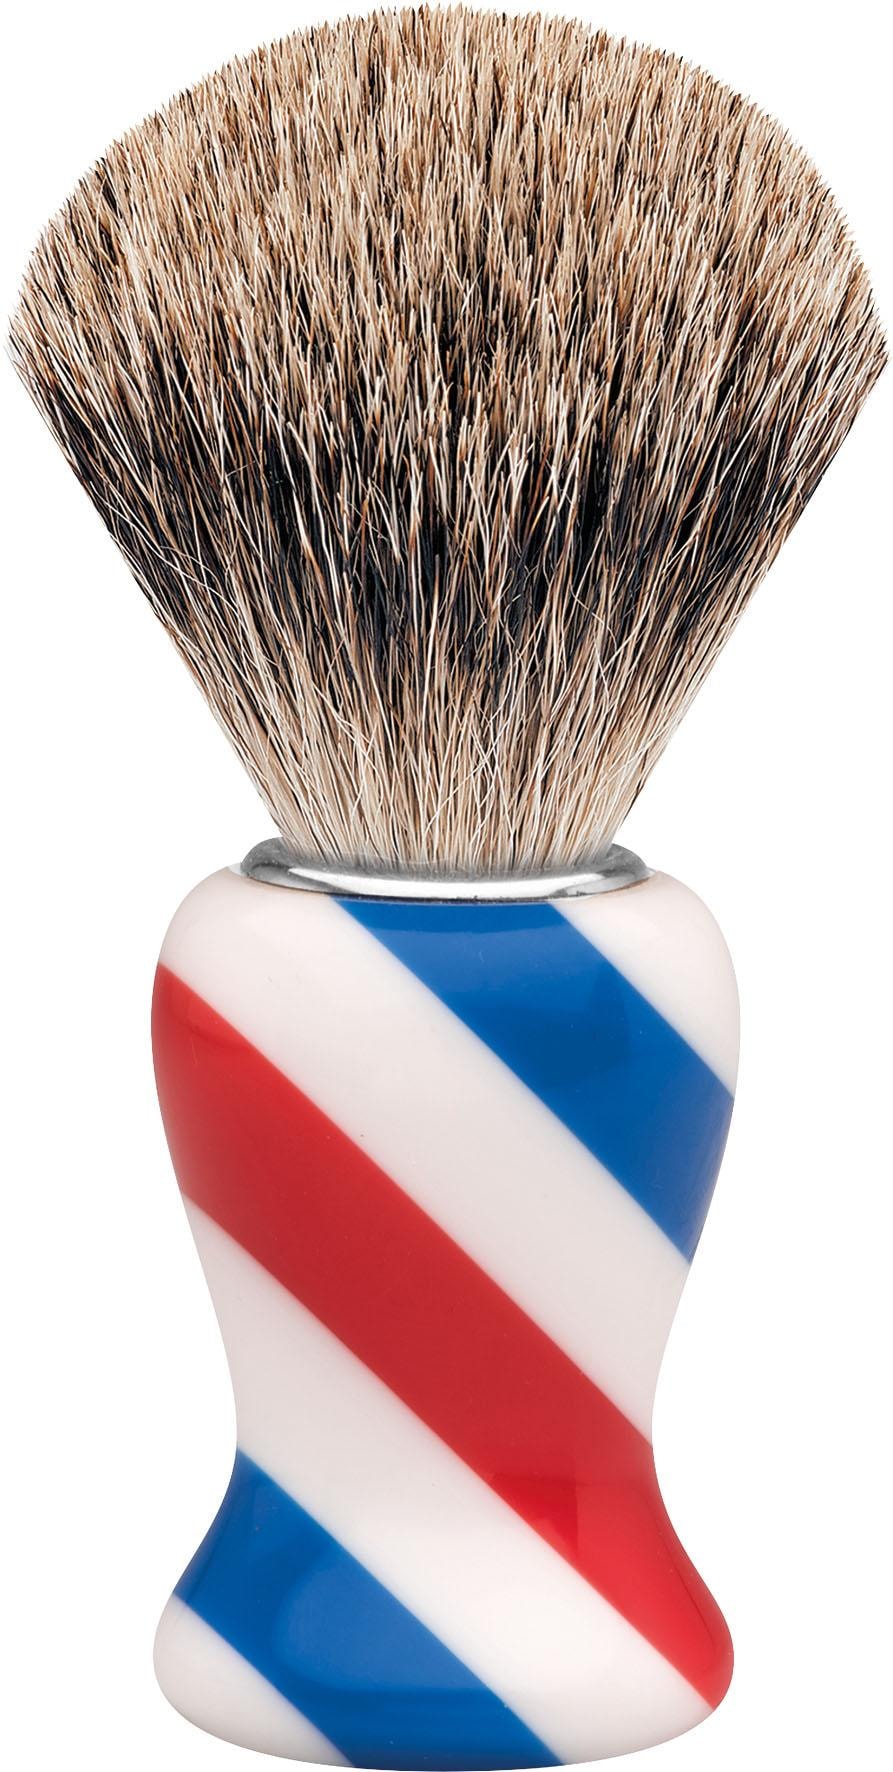 ERBE Rasierpinsel Dachshaar, Barbershop Design/Stripes »M«, bei online shoppen OTTO